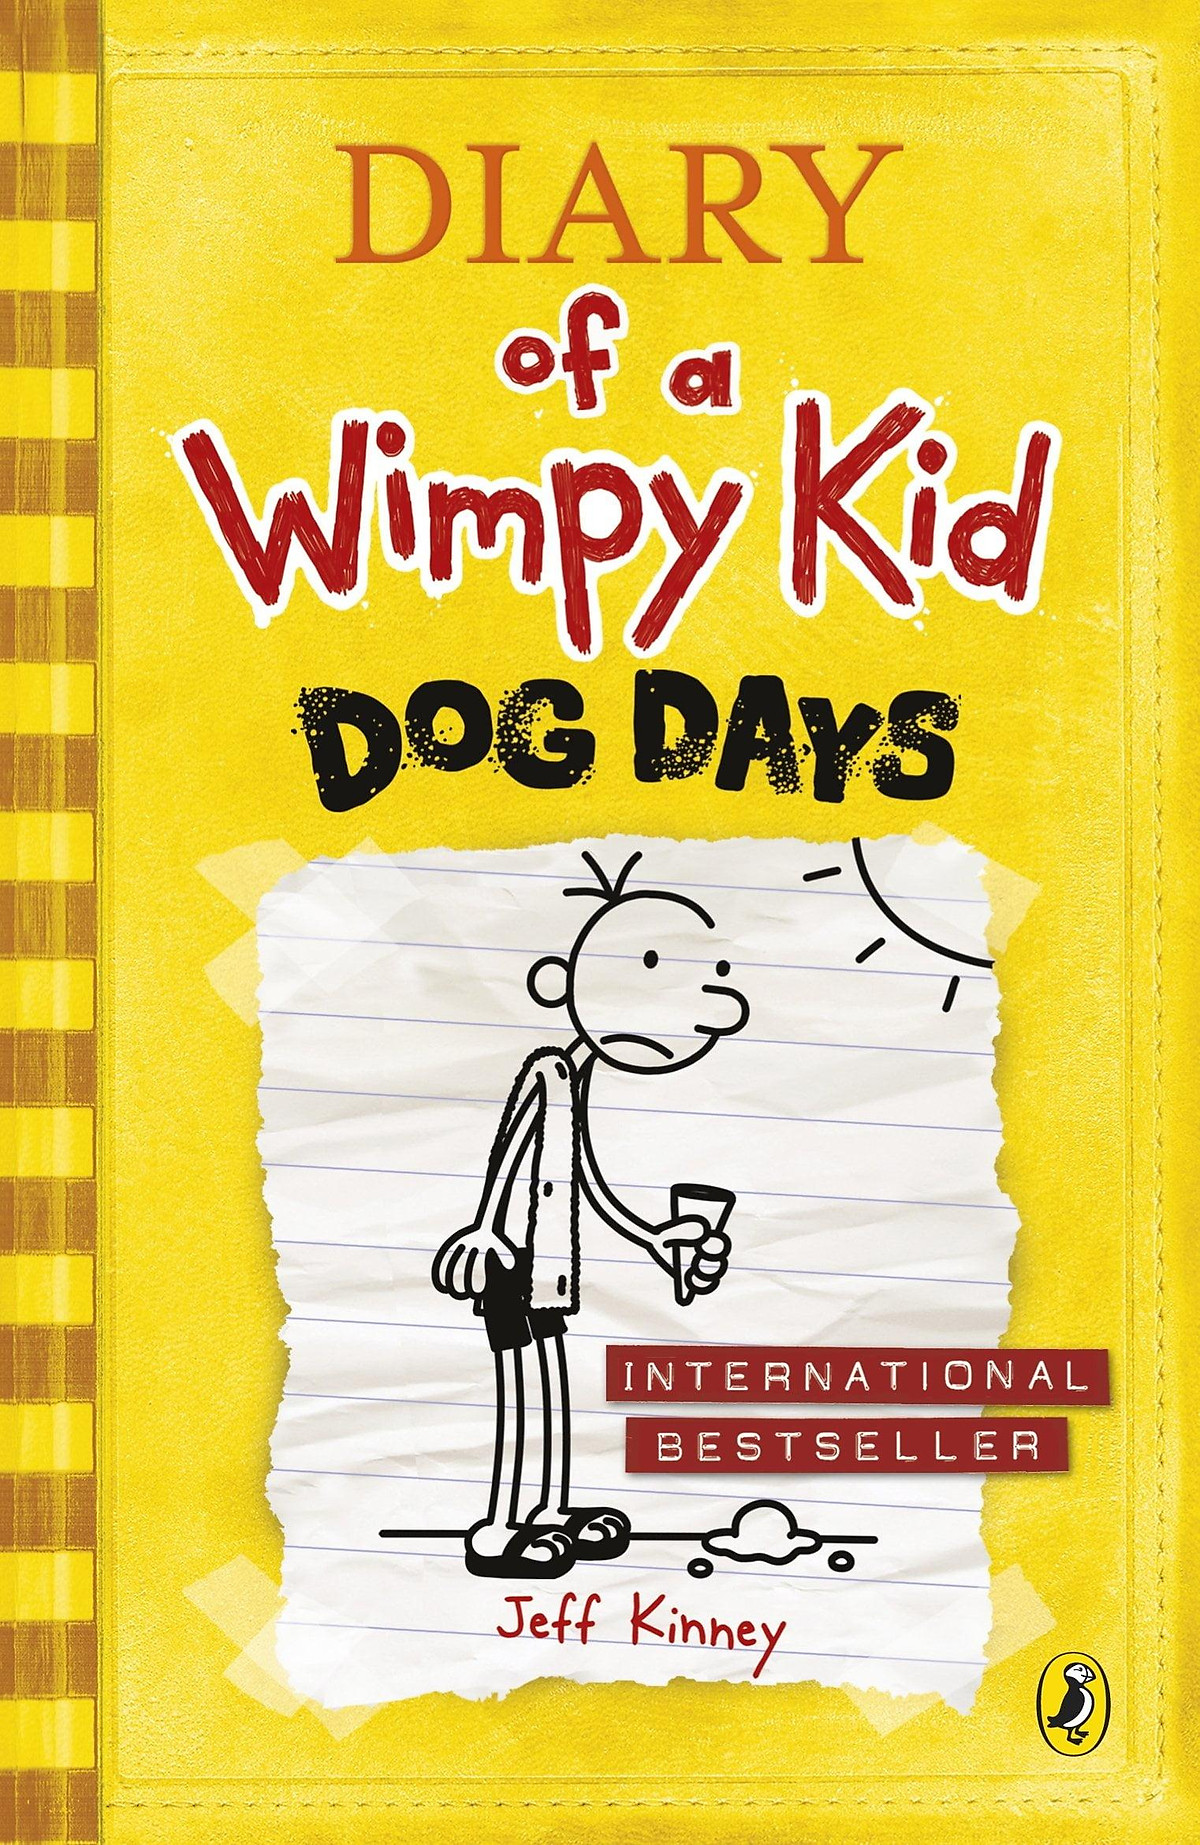 Truyện thiếu nhi tiếng Anh - Diary Of A Wimpy Kid 04 : Dog Days (Paperback)